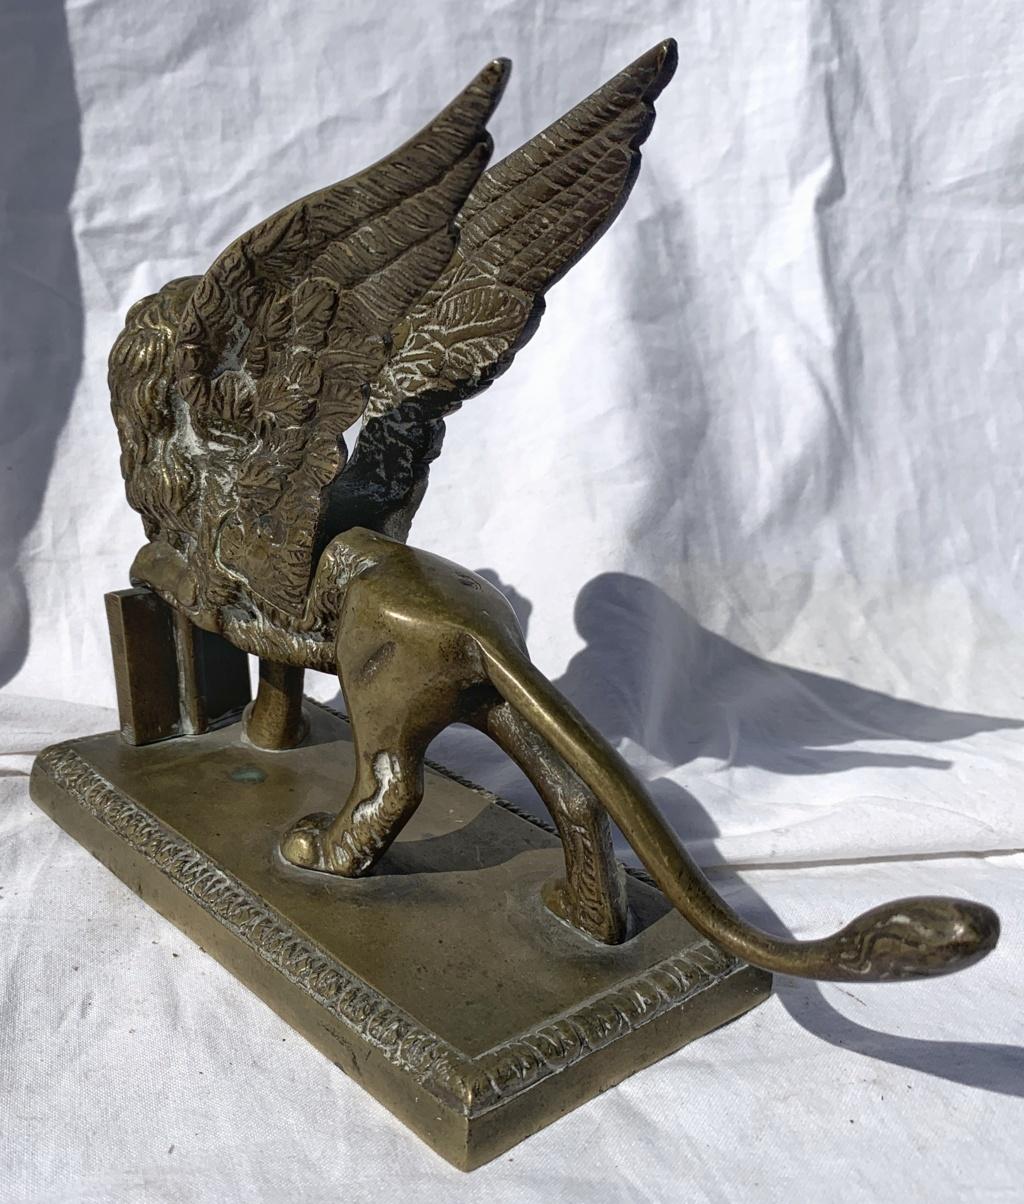 19-20th century Italian bronze sculpture - St Mark Lion - Venice Napoleon III - Gold Abstract Sculpture by Unknown